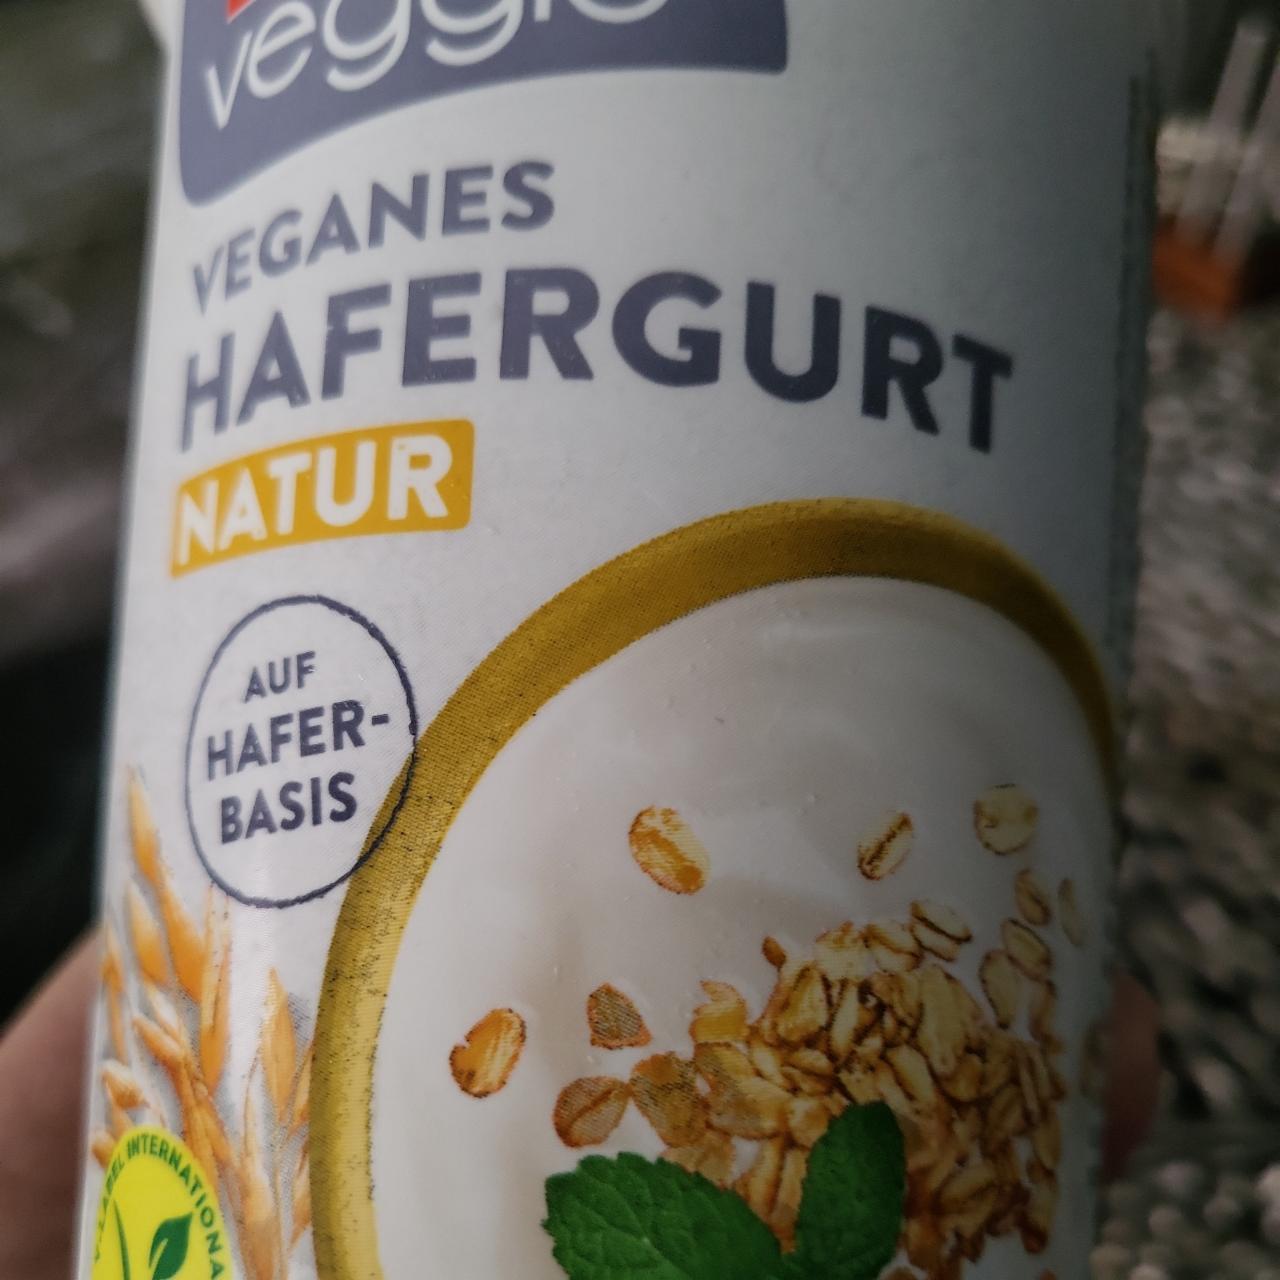 Fotografie - veganes hafergurt Spar veggie